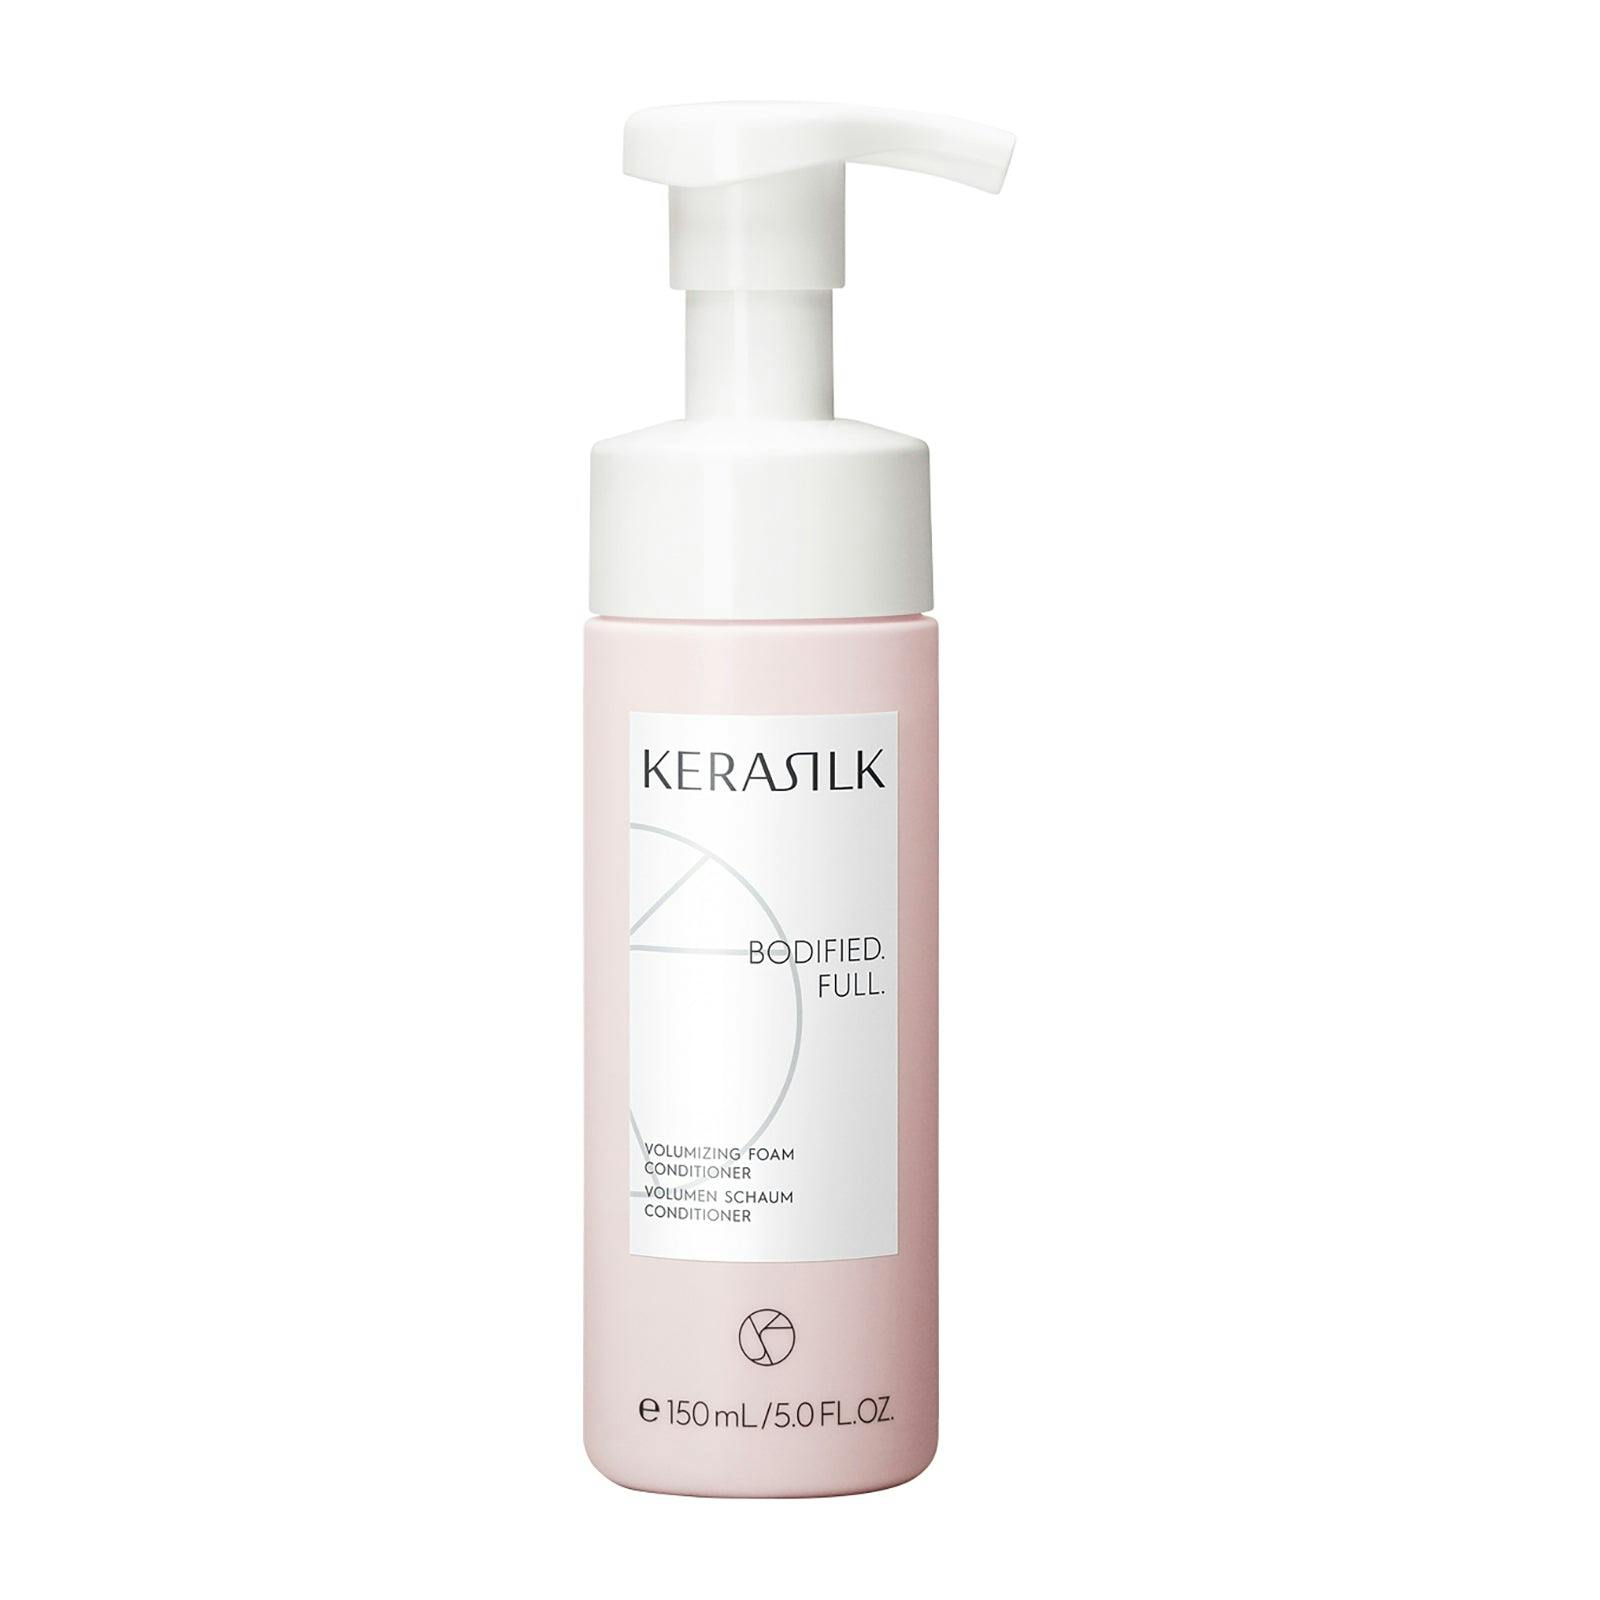 Kerasilk Volumizing Shampoo and Foam-Conditioner Bundle